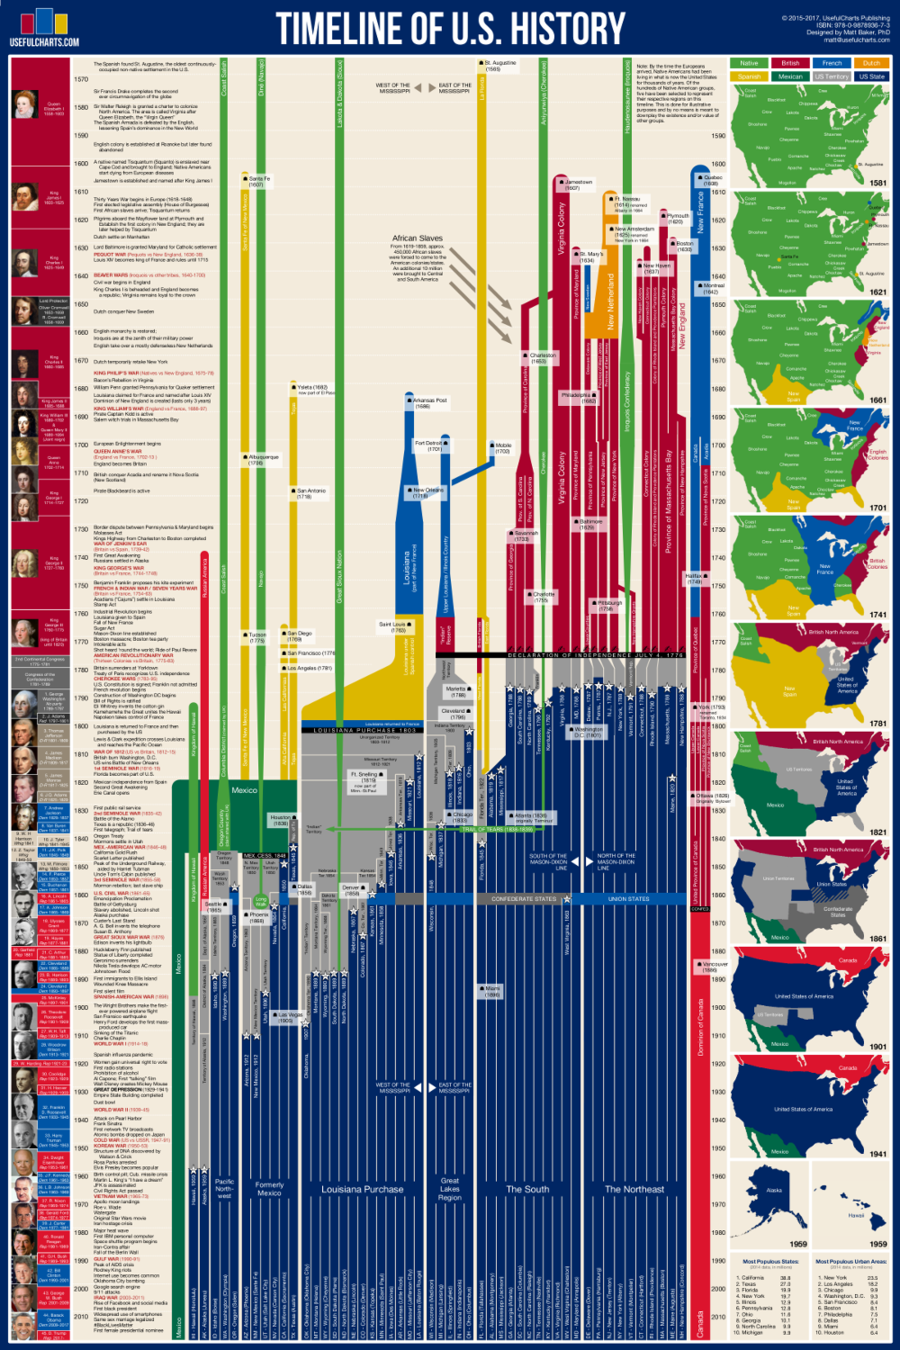 Timeline of U.S. History